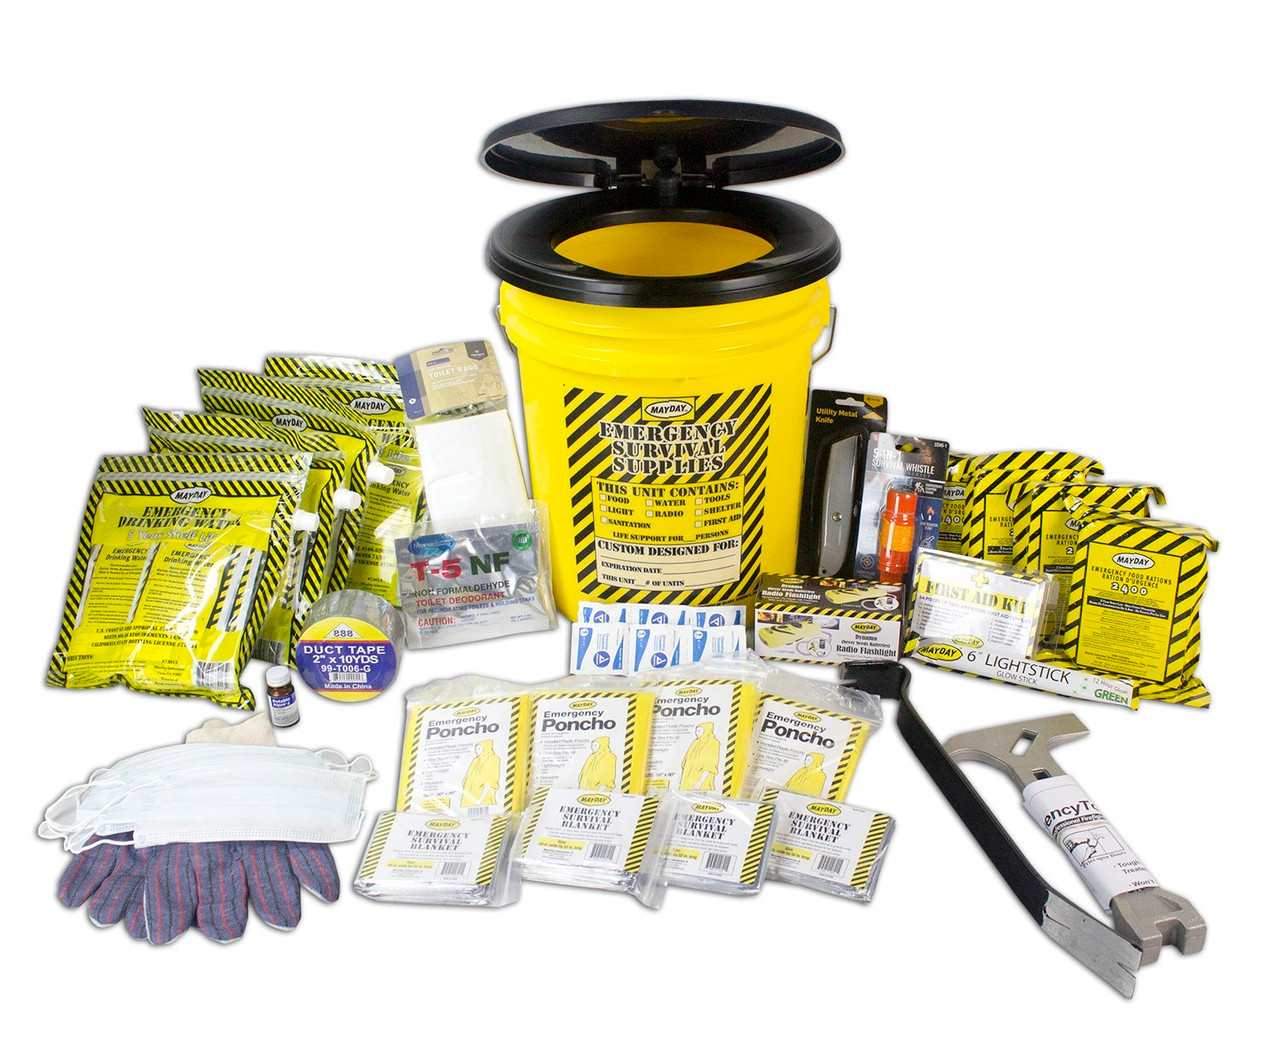 earthquake preparedness kit 4 person